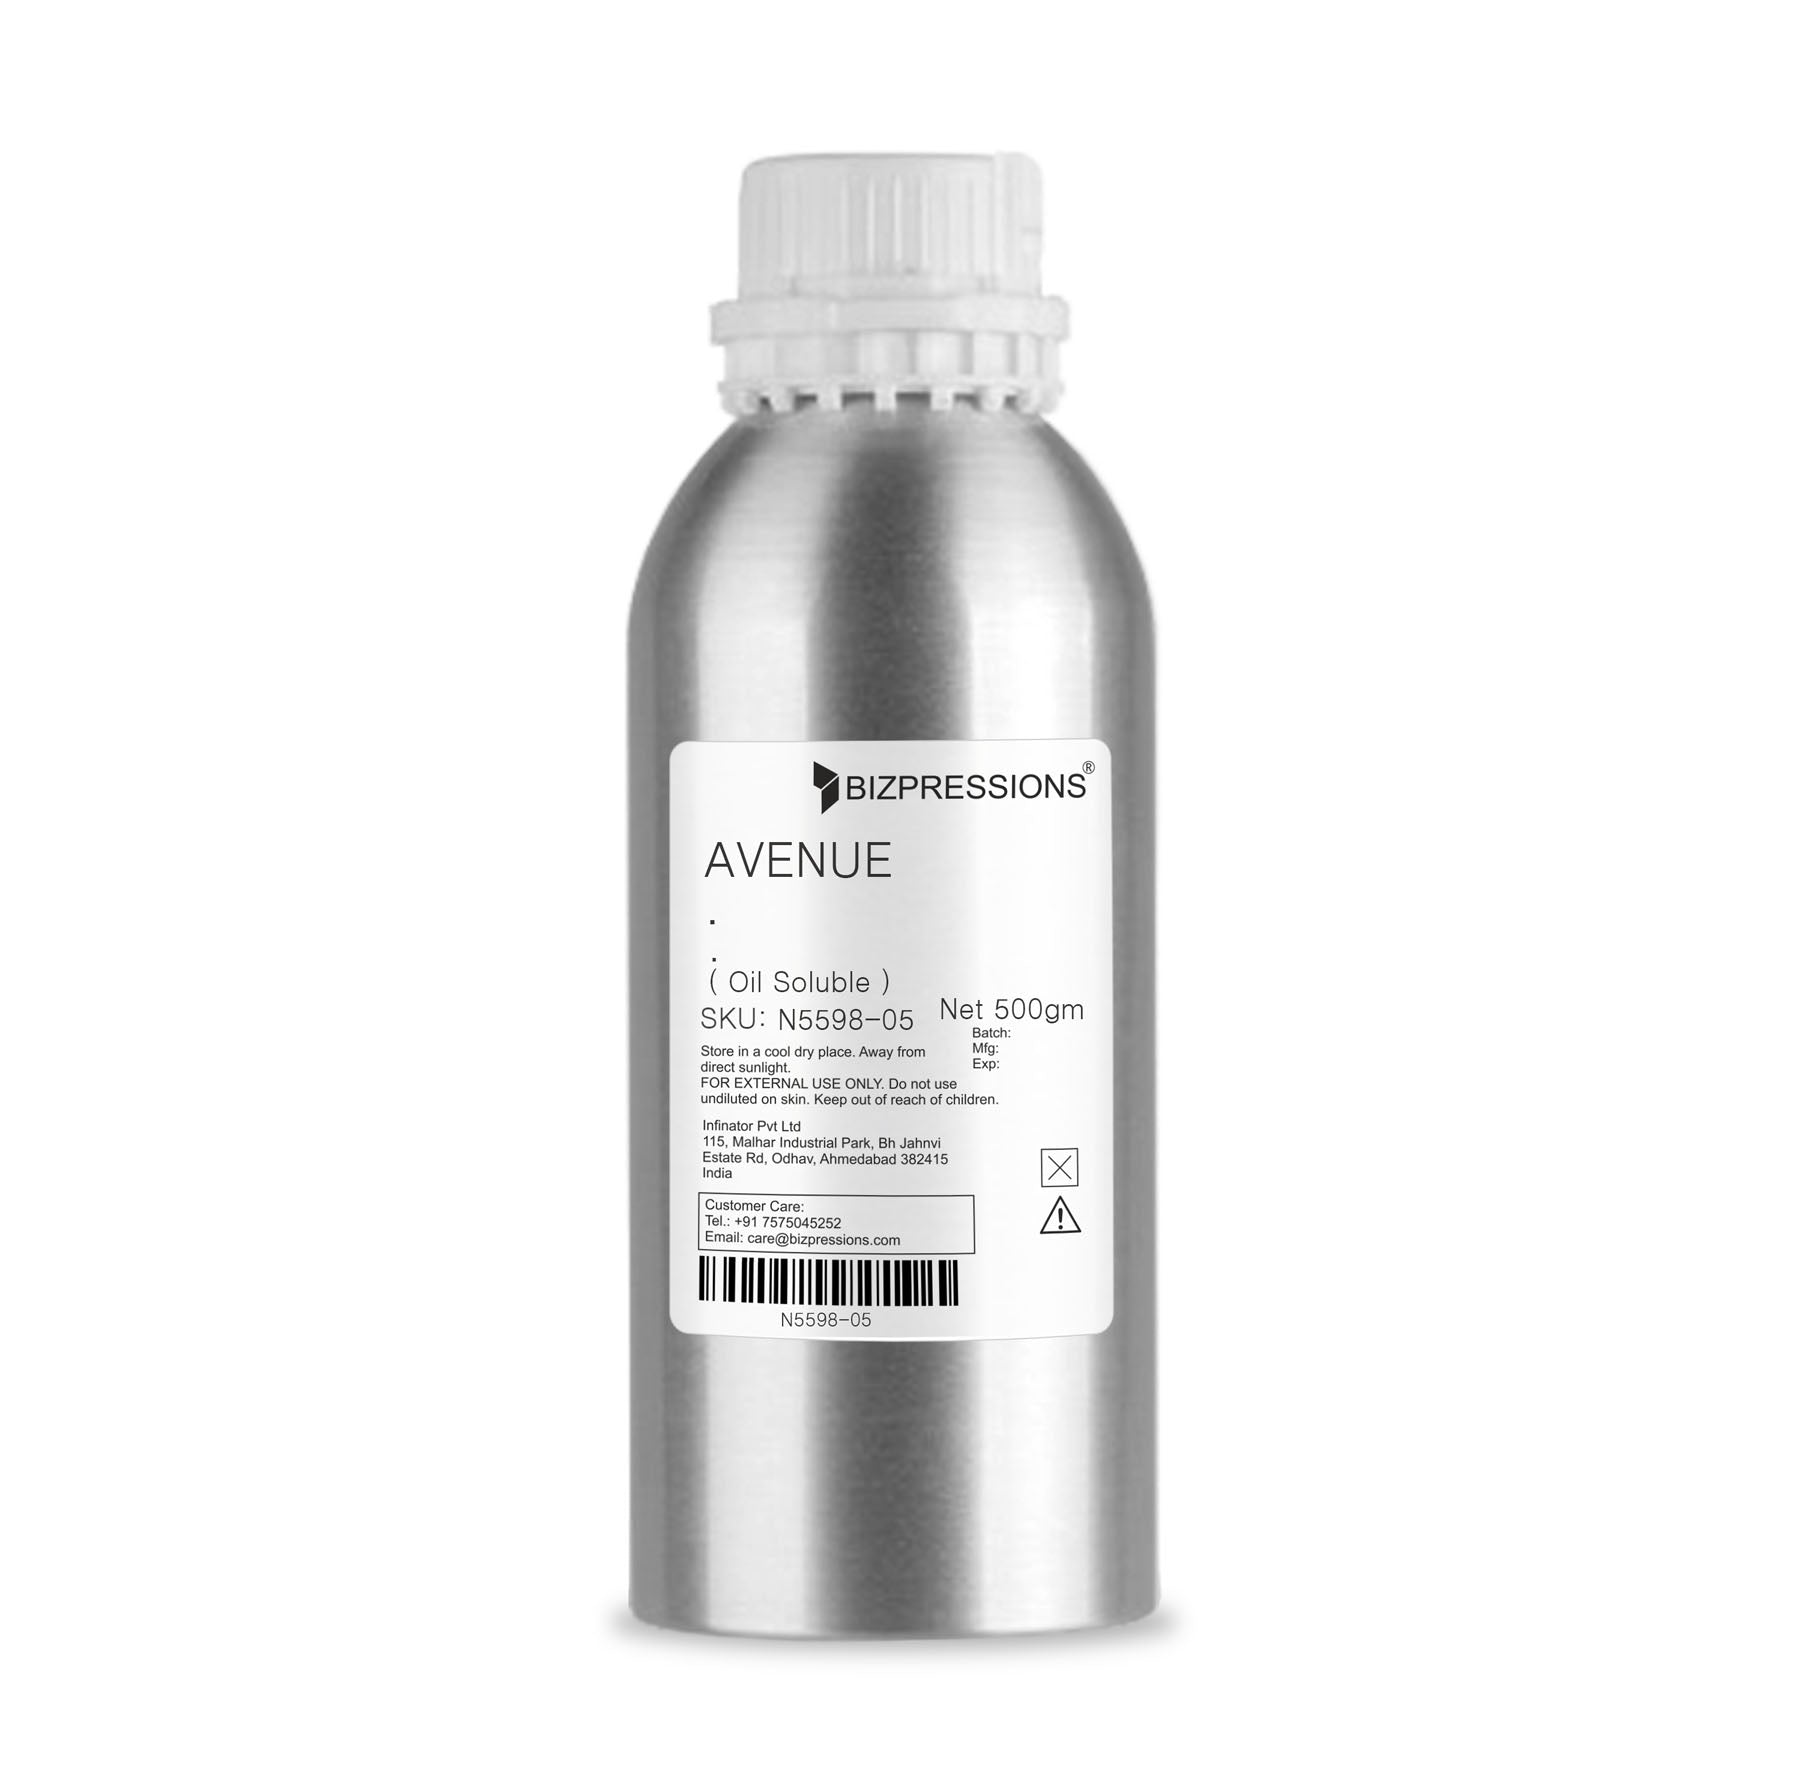 AVENUE - Fragrance ( Oil Soluble ) - 500 gm